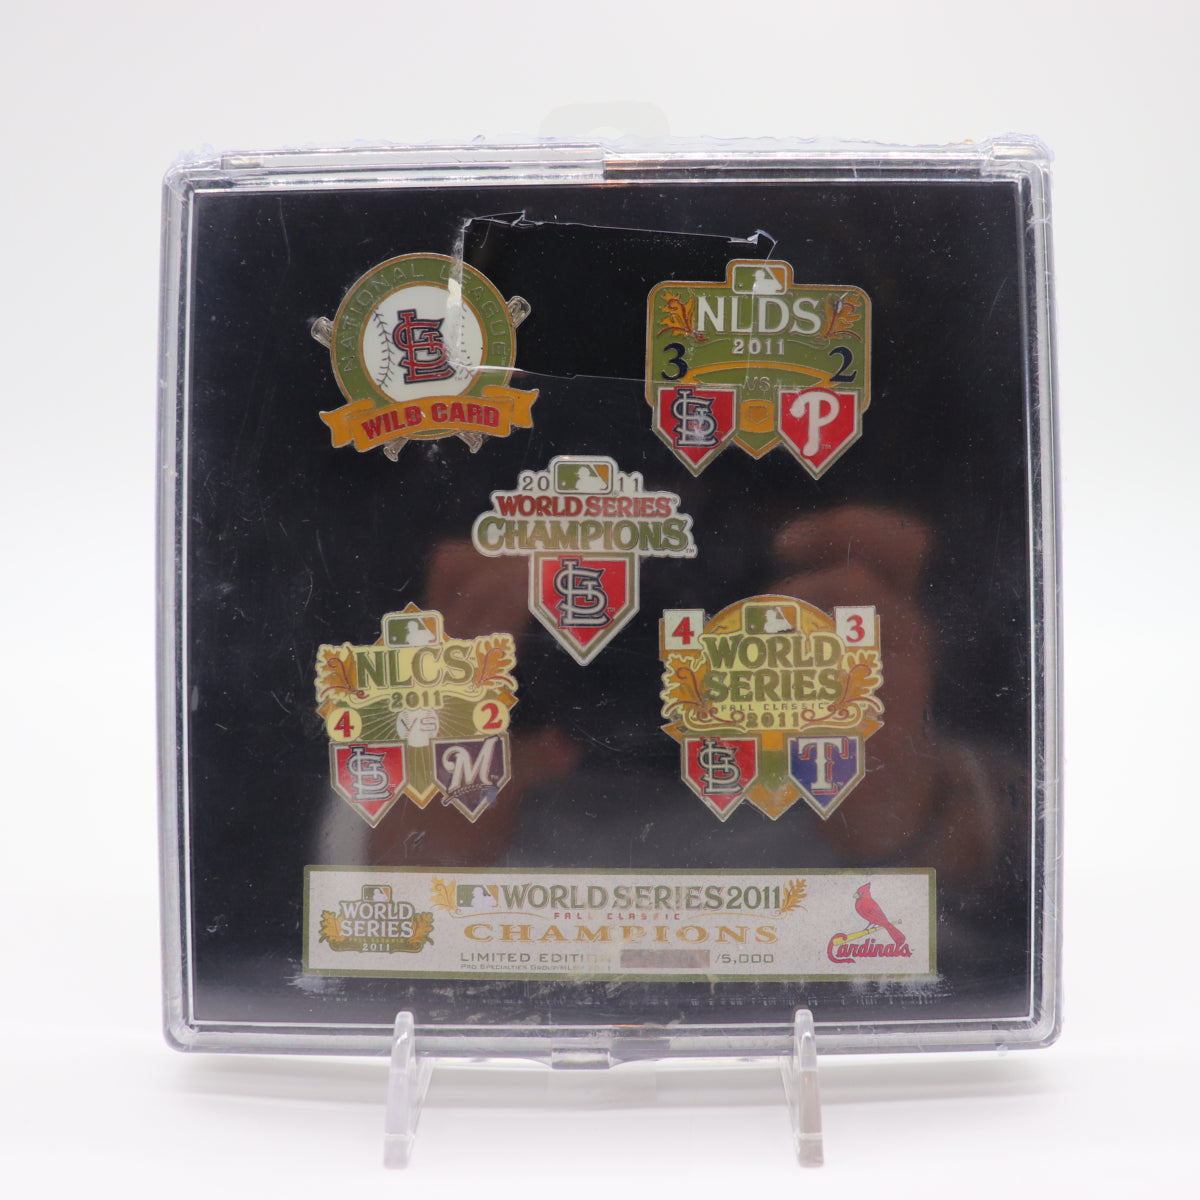 2011 World Series Champion St. Louis Cardinals Limited Edition Commemorative Pin Set, #1330/5000